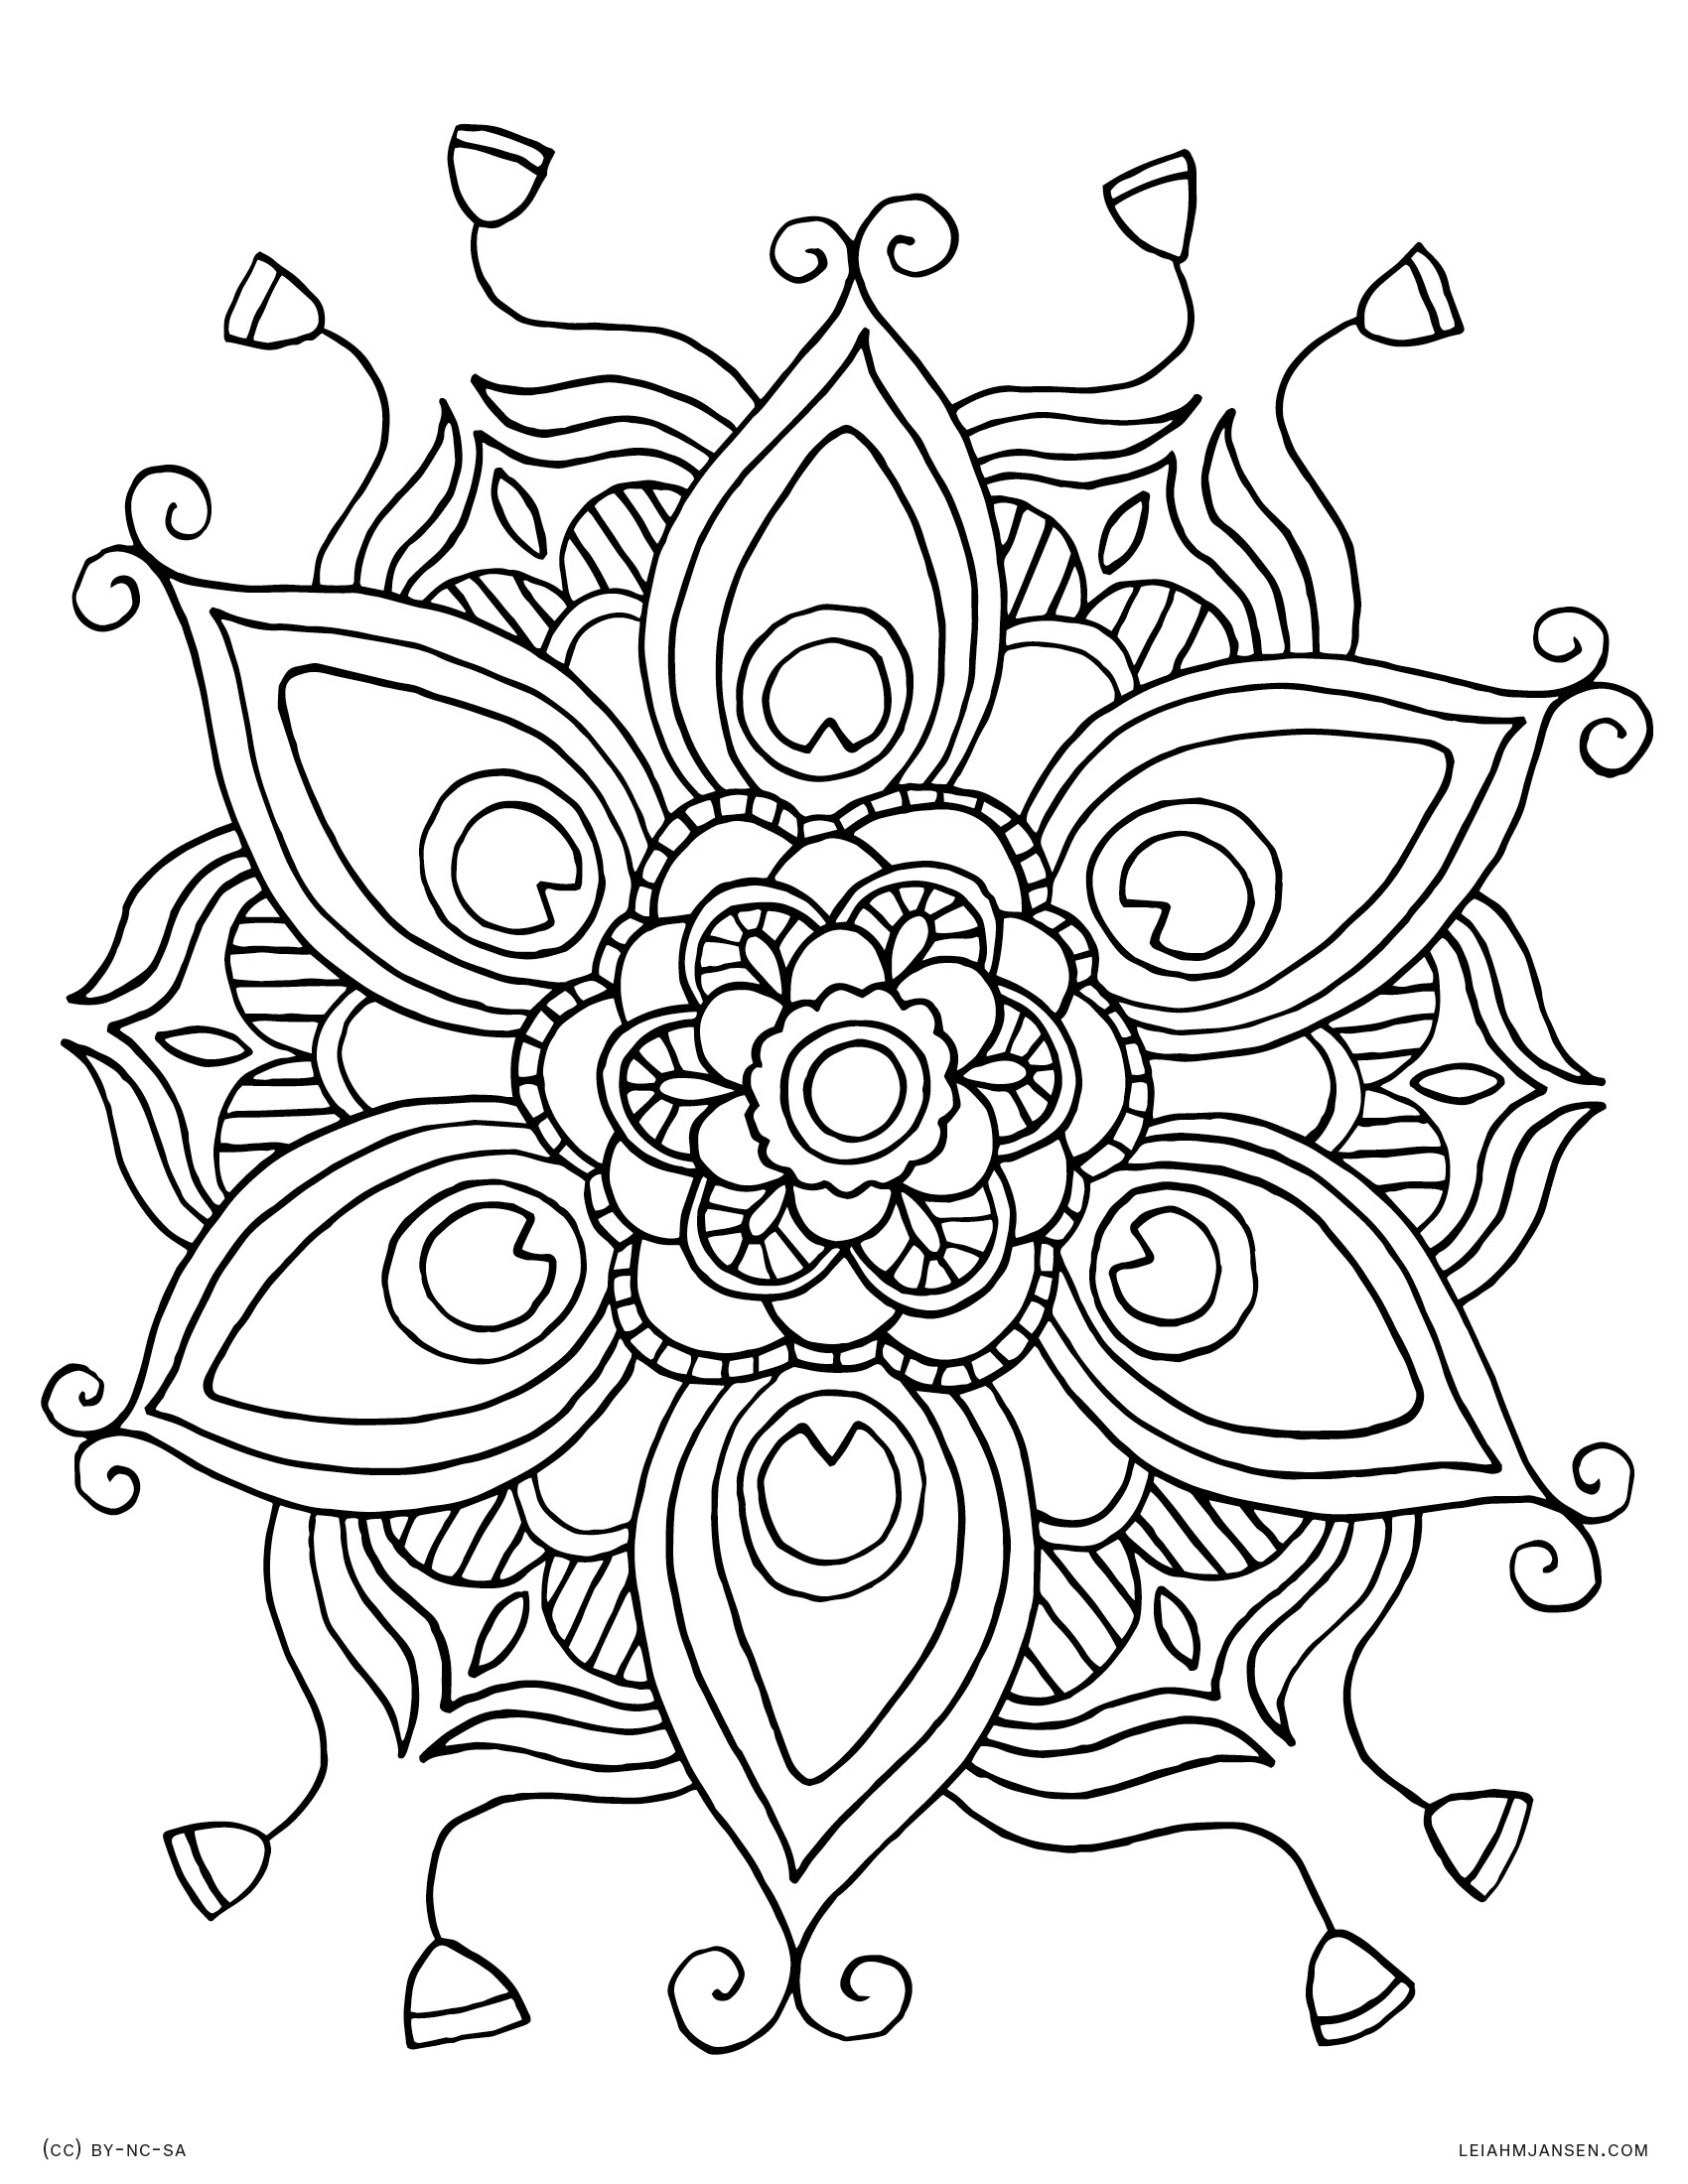 Coloring Pages - Mandala Coloring Free Printable